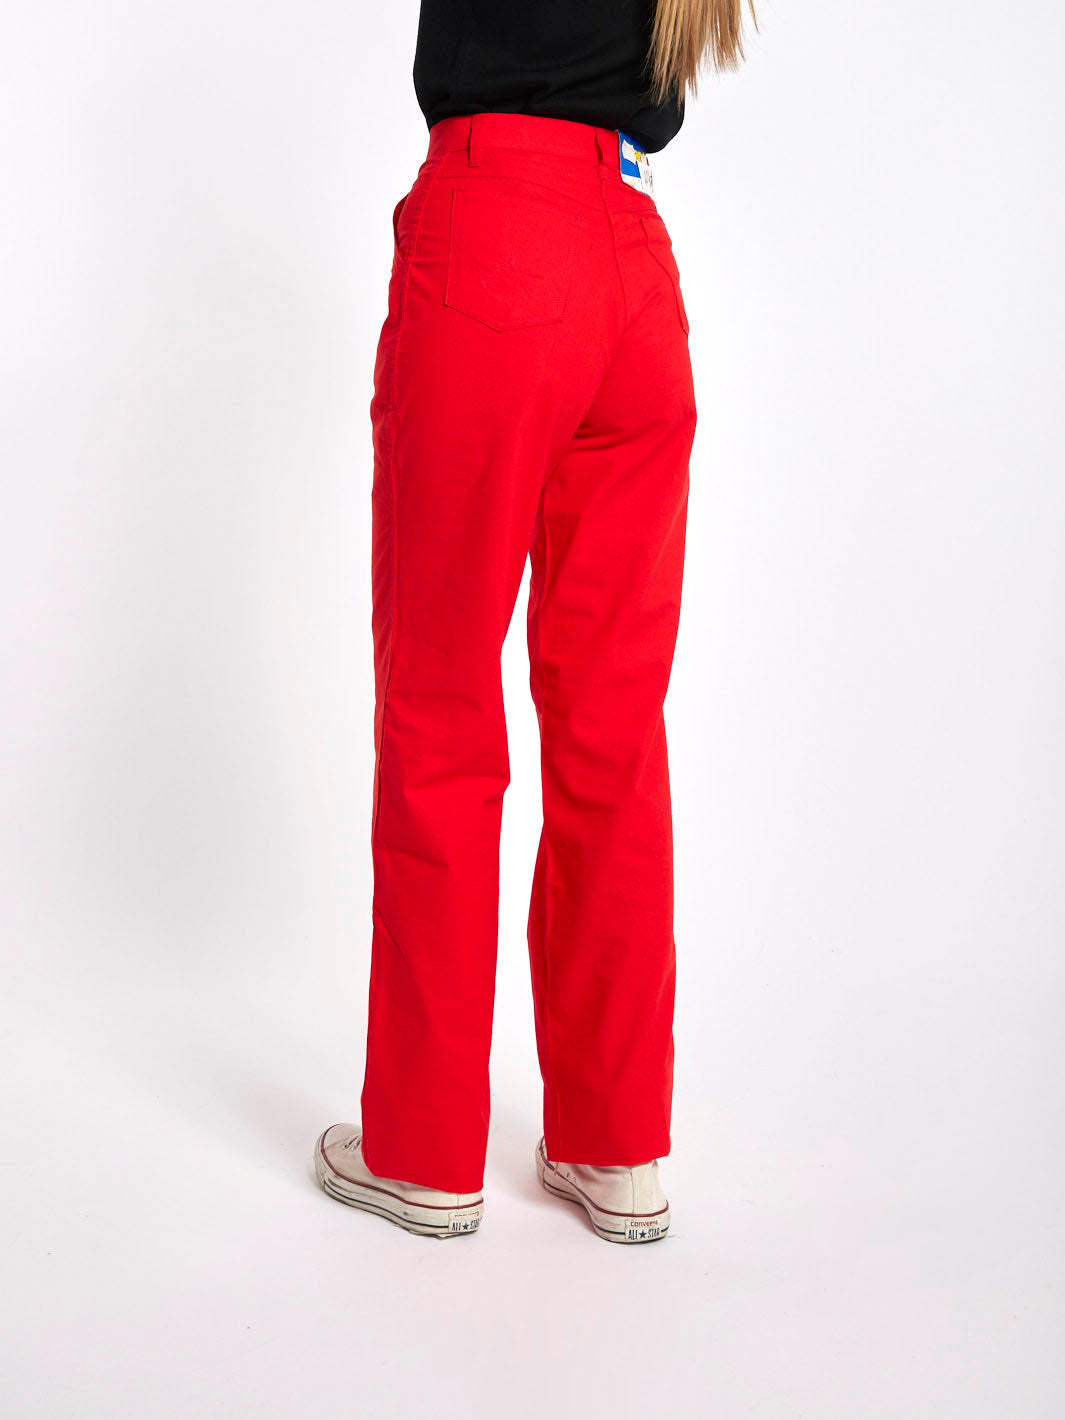 1980s Wrangler slim cut trouser in bright red